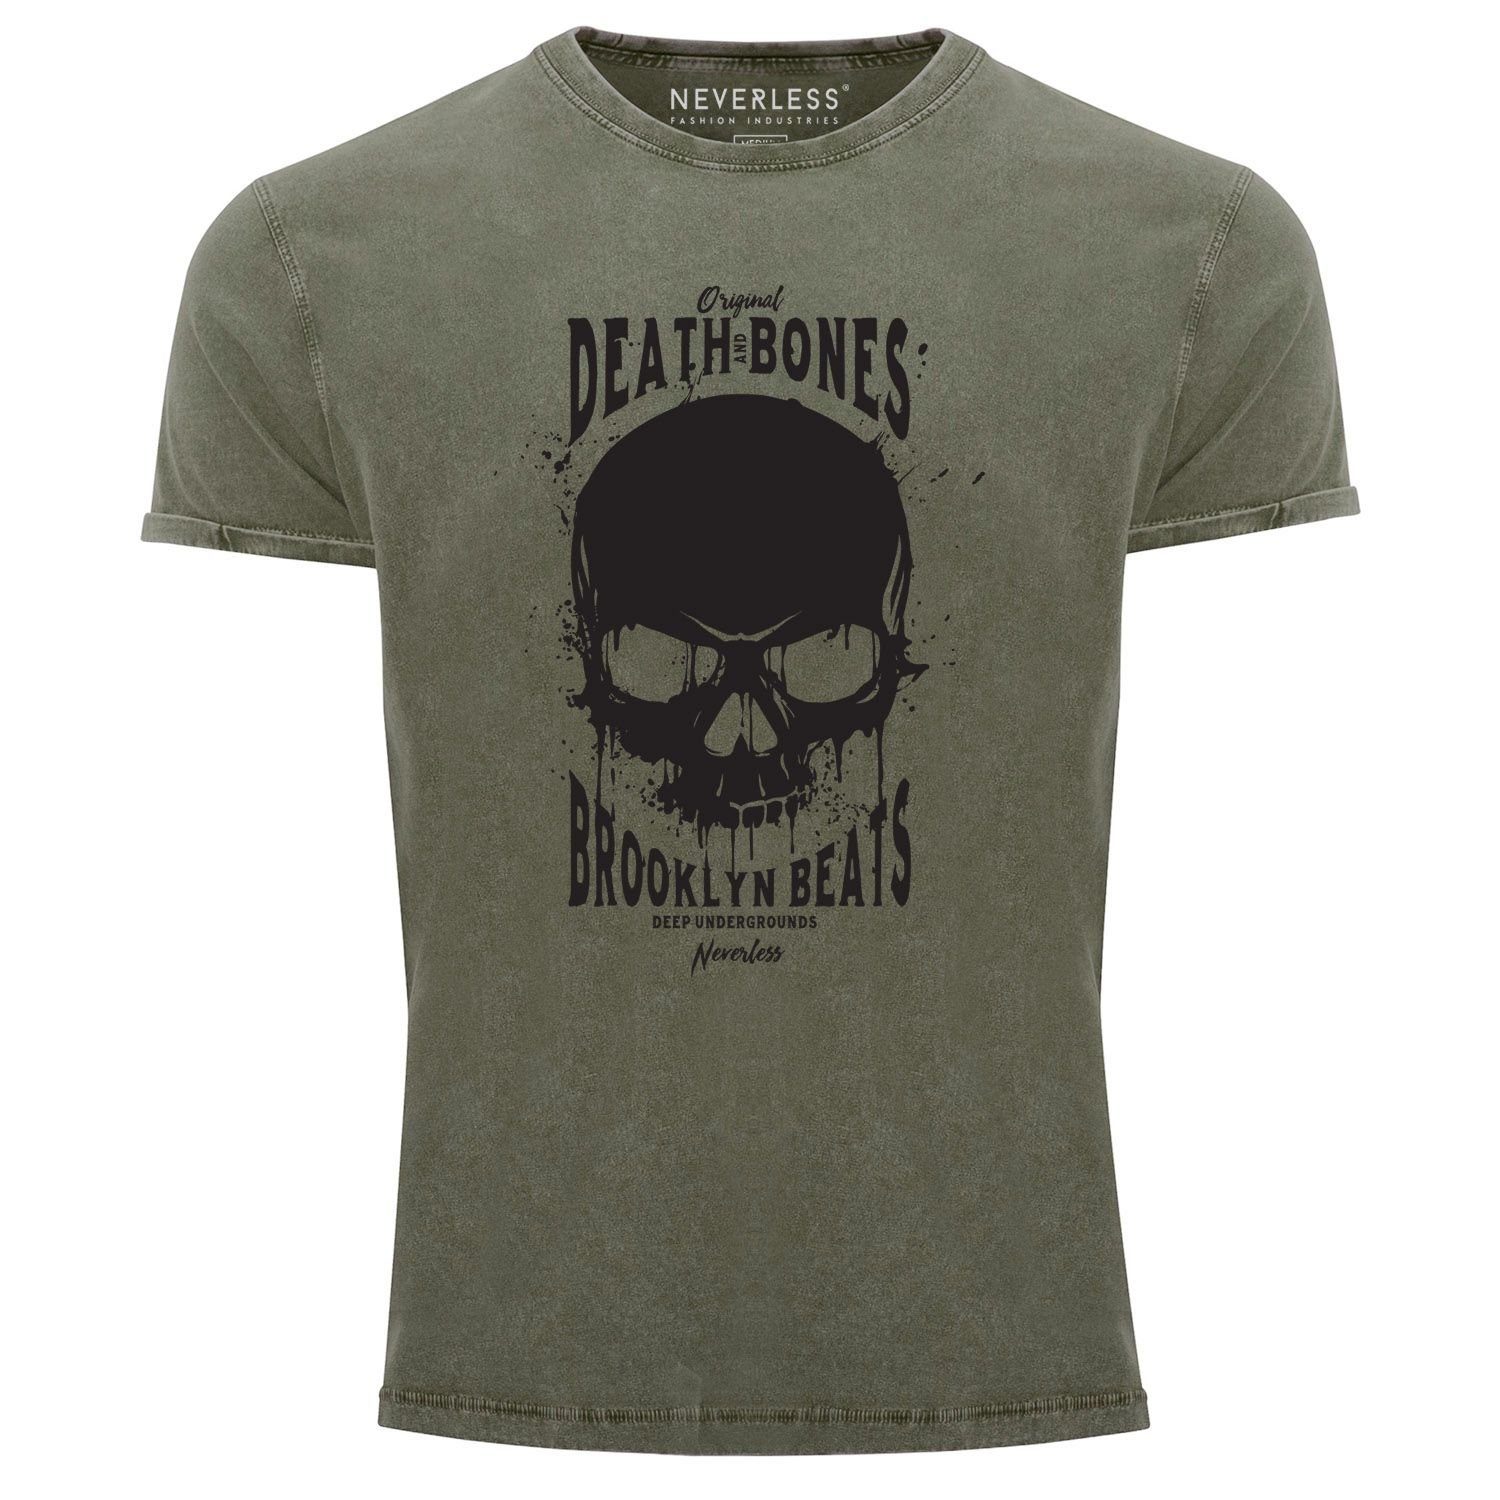 Neverless Print-Shirt Neverless® Herren T-Shirt Vintage Shirt Printshirt Skull Death and Bones Aufdruck Used Look Slim Fit mit Print oliv